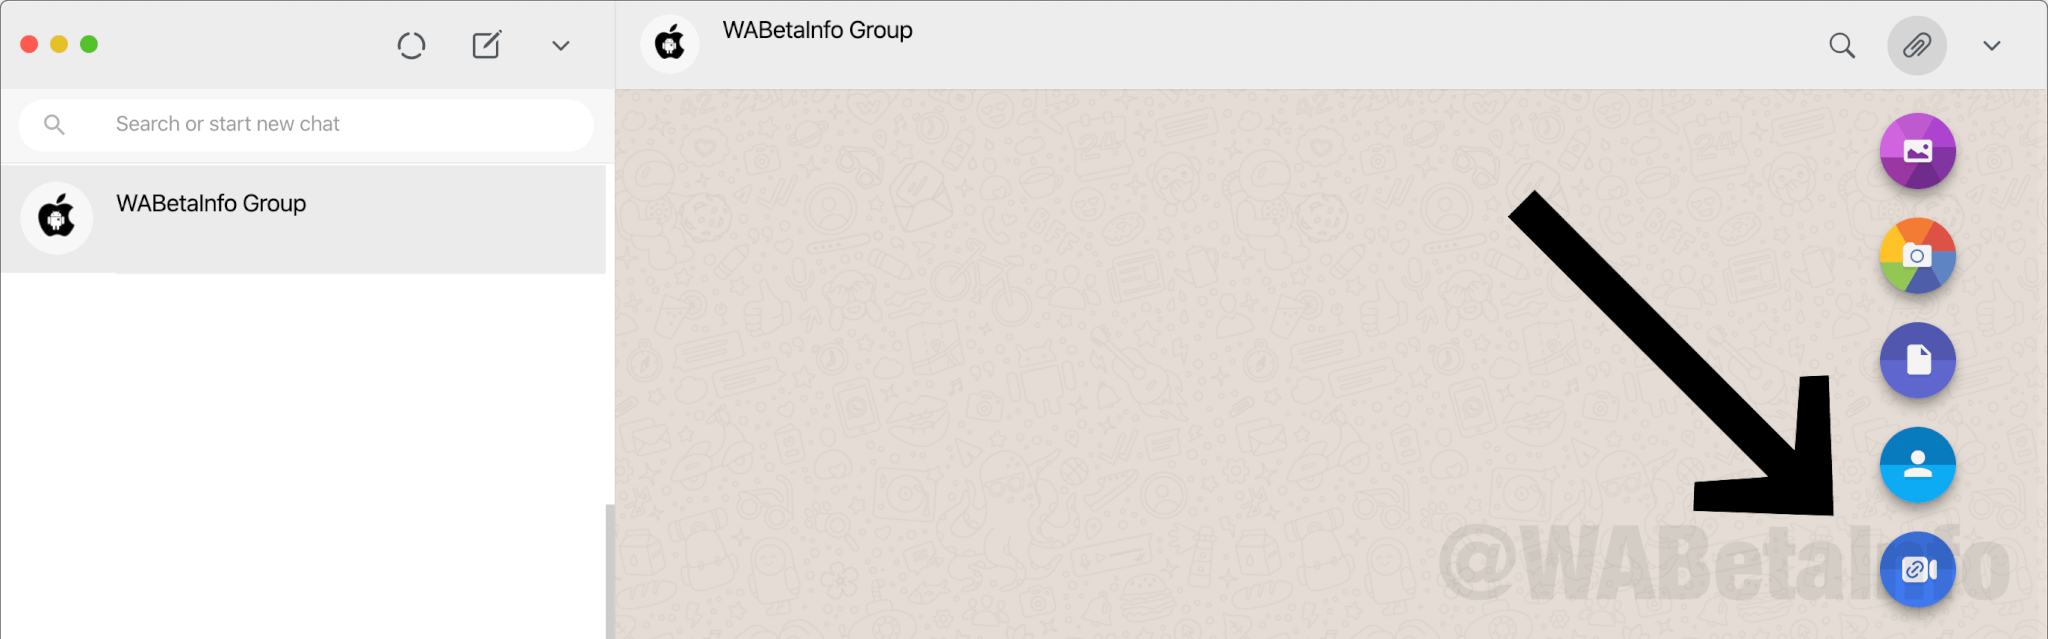 WhatsApp Web shows the Messenger Rooms shortcut